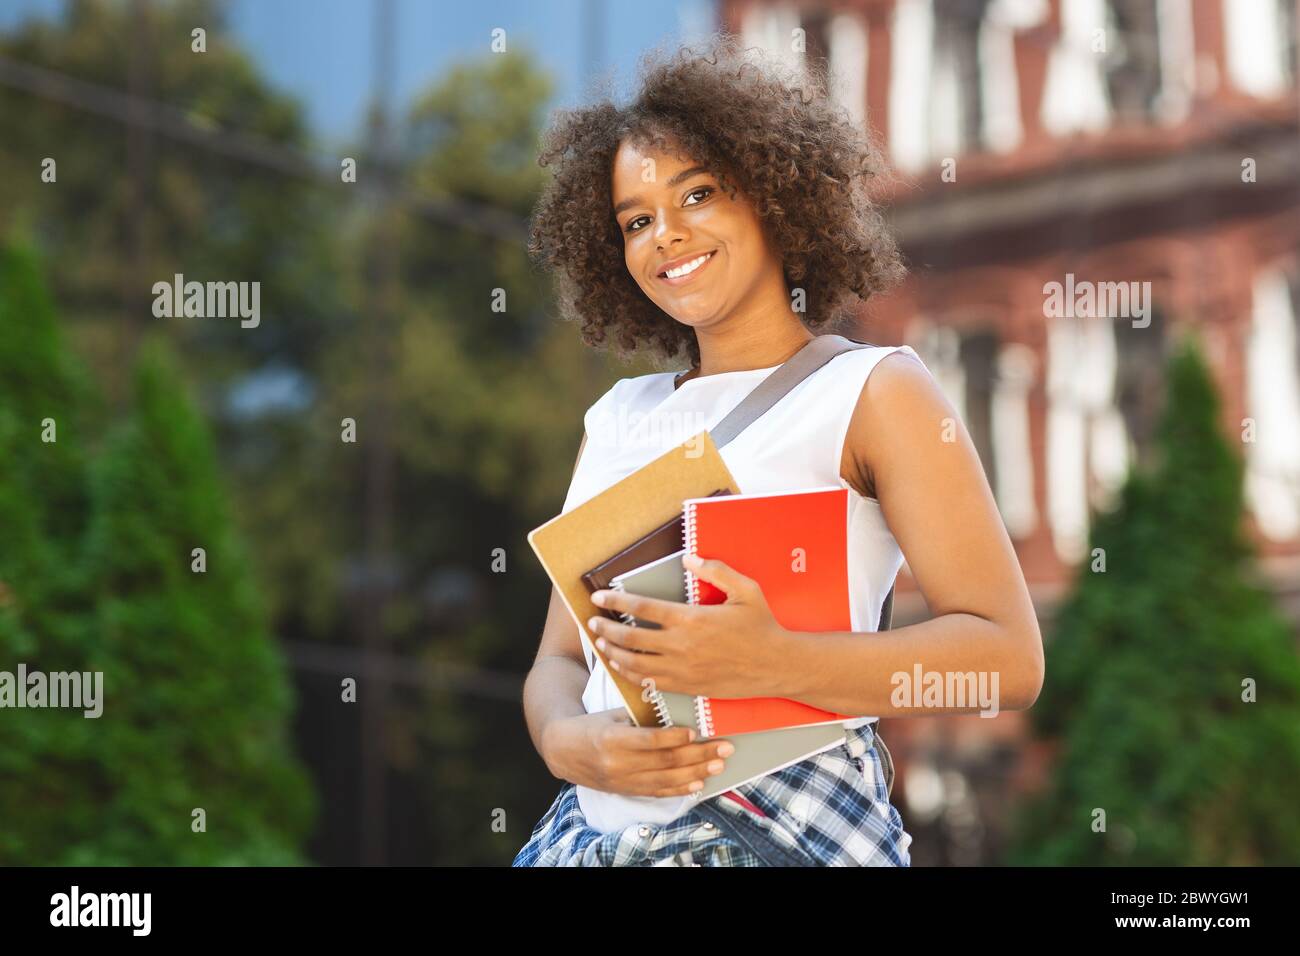 Student Orientation Concept. Happy black teen girl holding workbooks posing outdoors Stock Photo